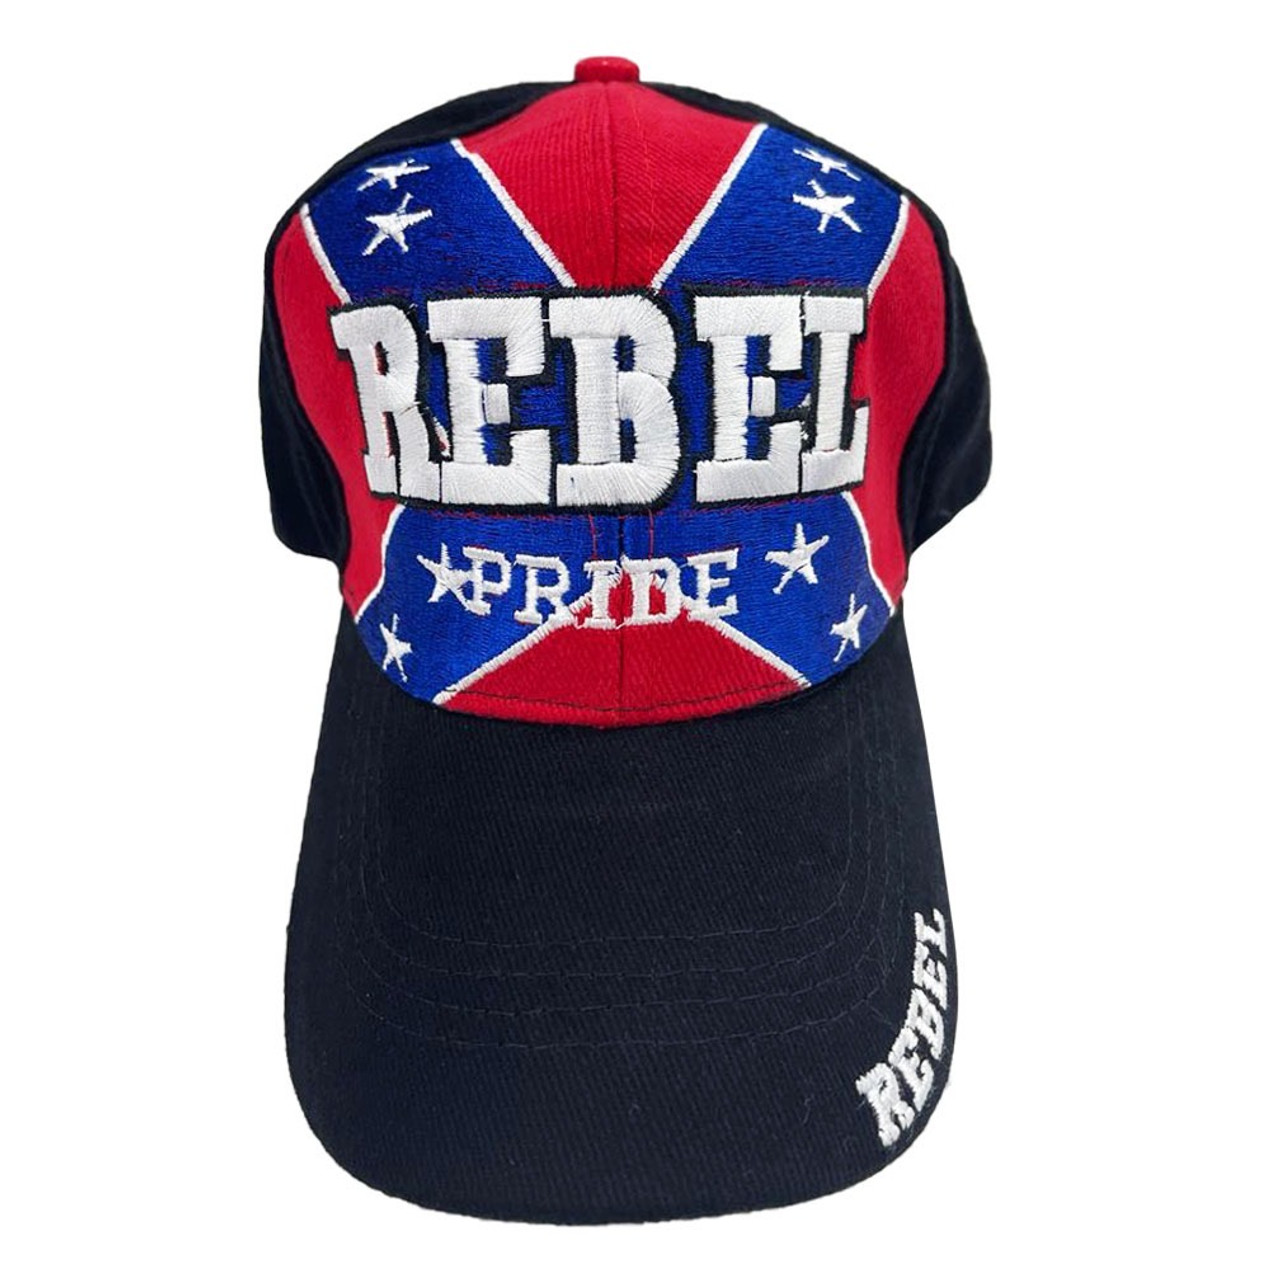 Rebel Pride embroidered Confederate Hat